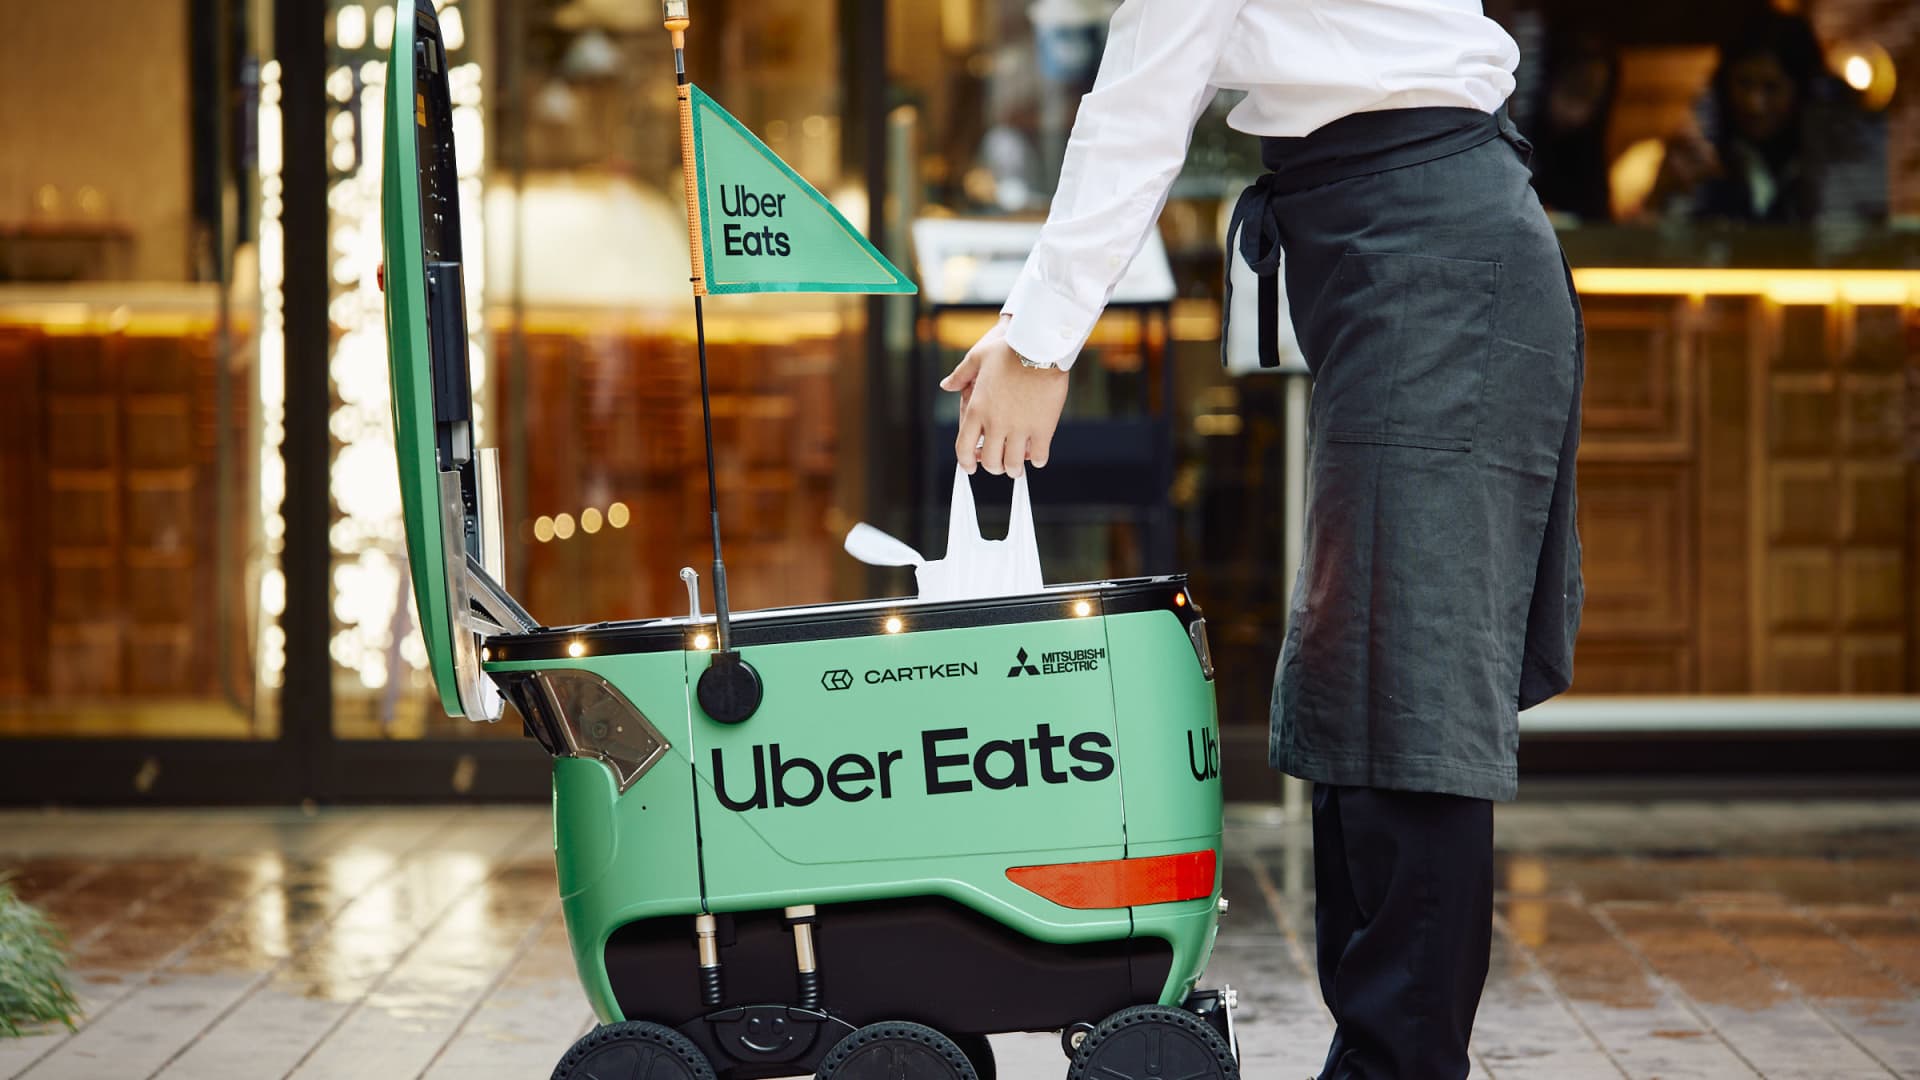 Uber Eats to start self-driving robot deliveries in Japan